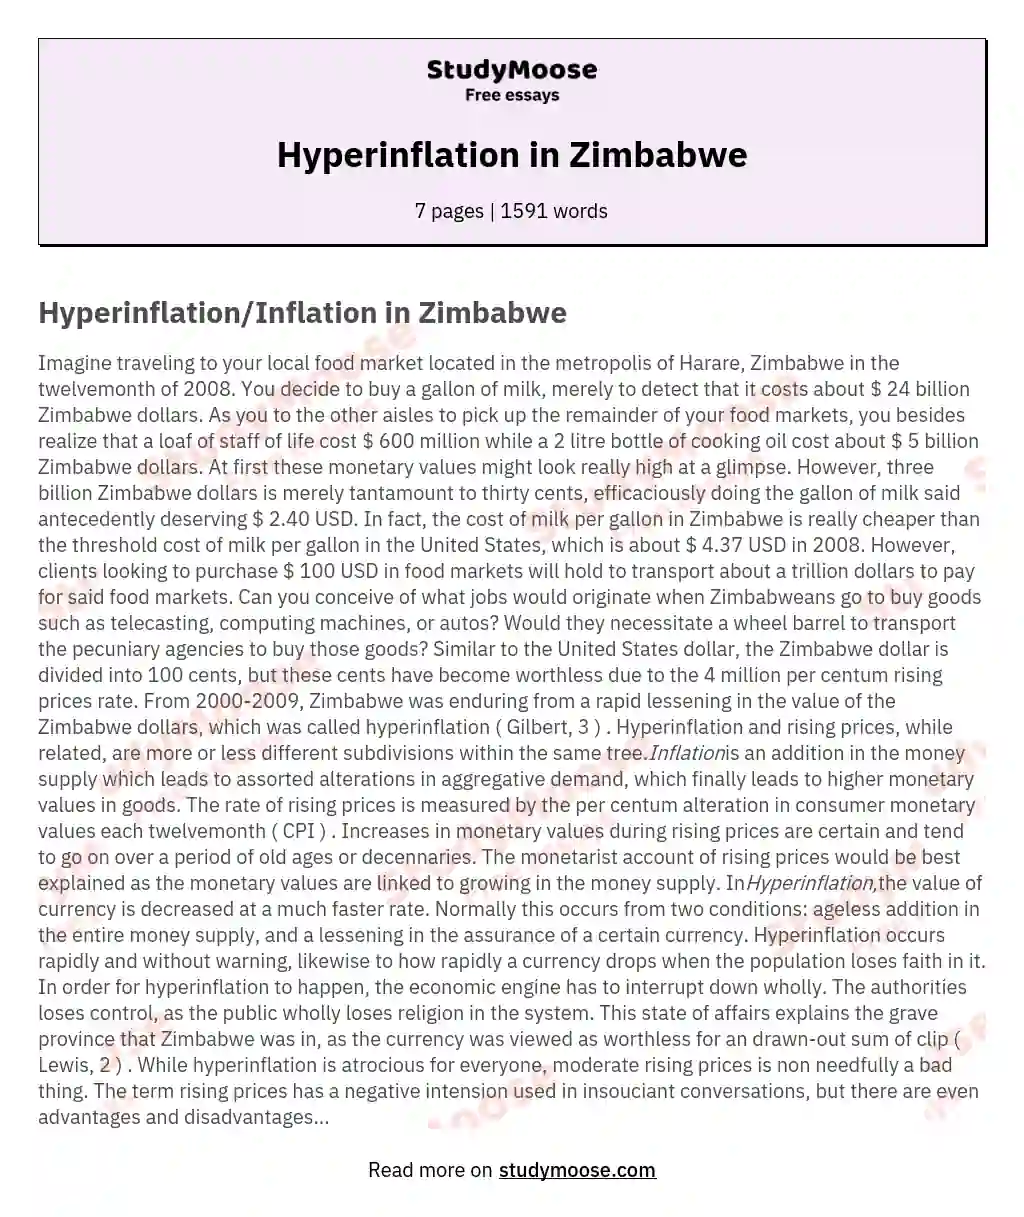 Hyperinflation in Zimbabwe essay